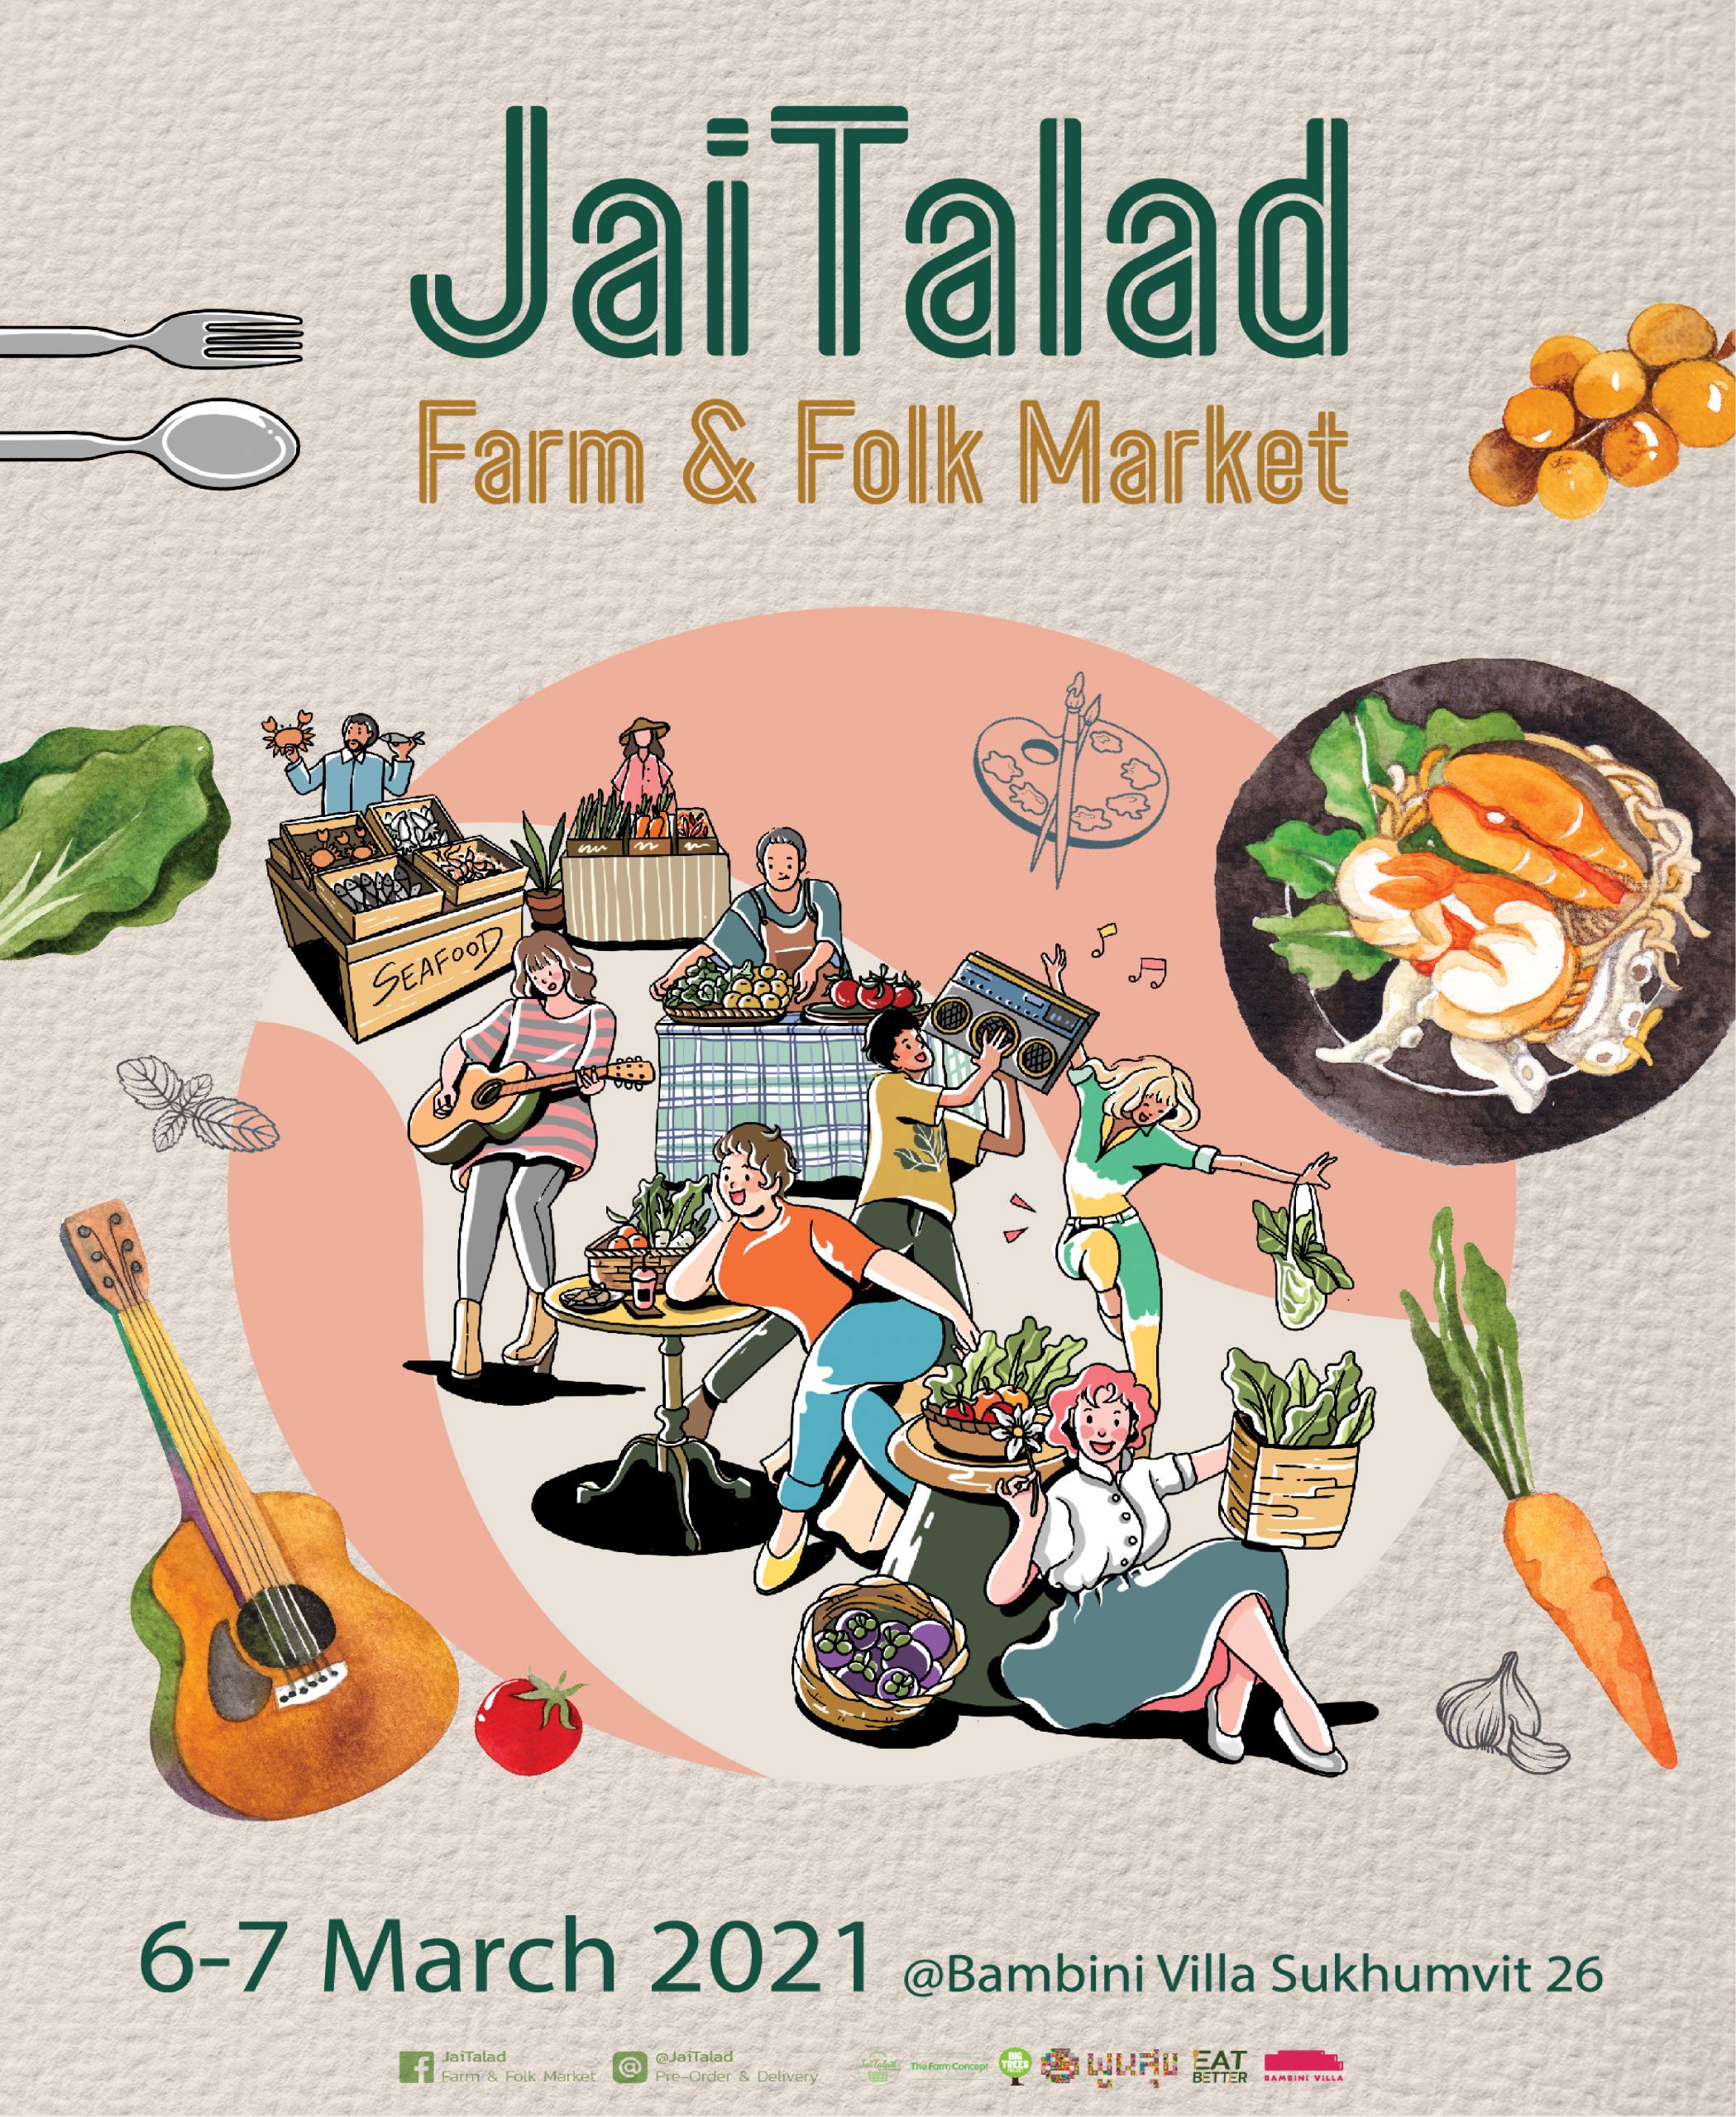 Jaitalad Farm & Folk Market 6-7 March - Bambini Villa Sukhumvit 26